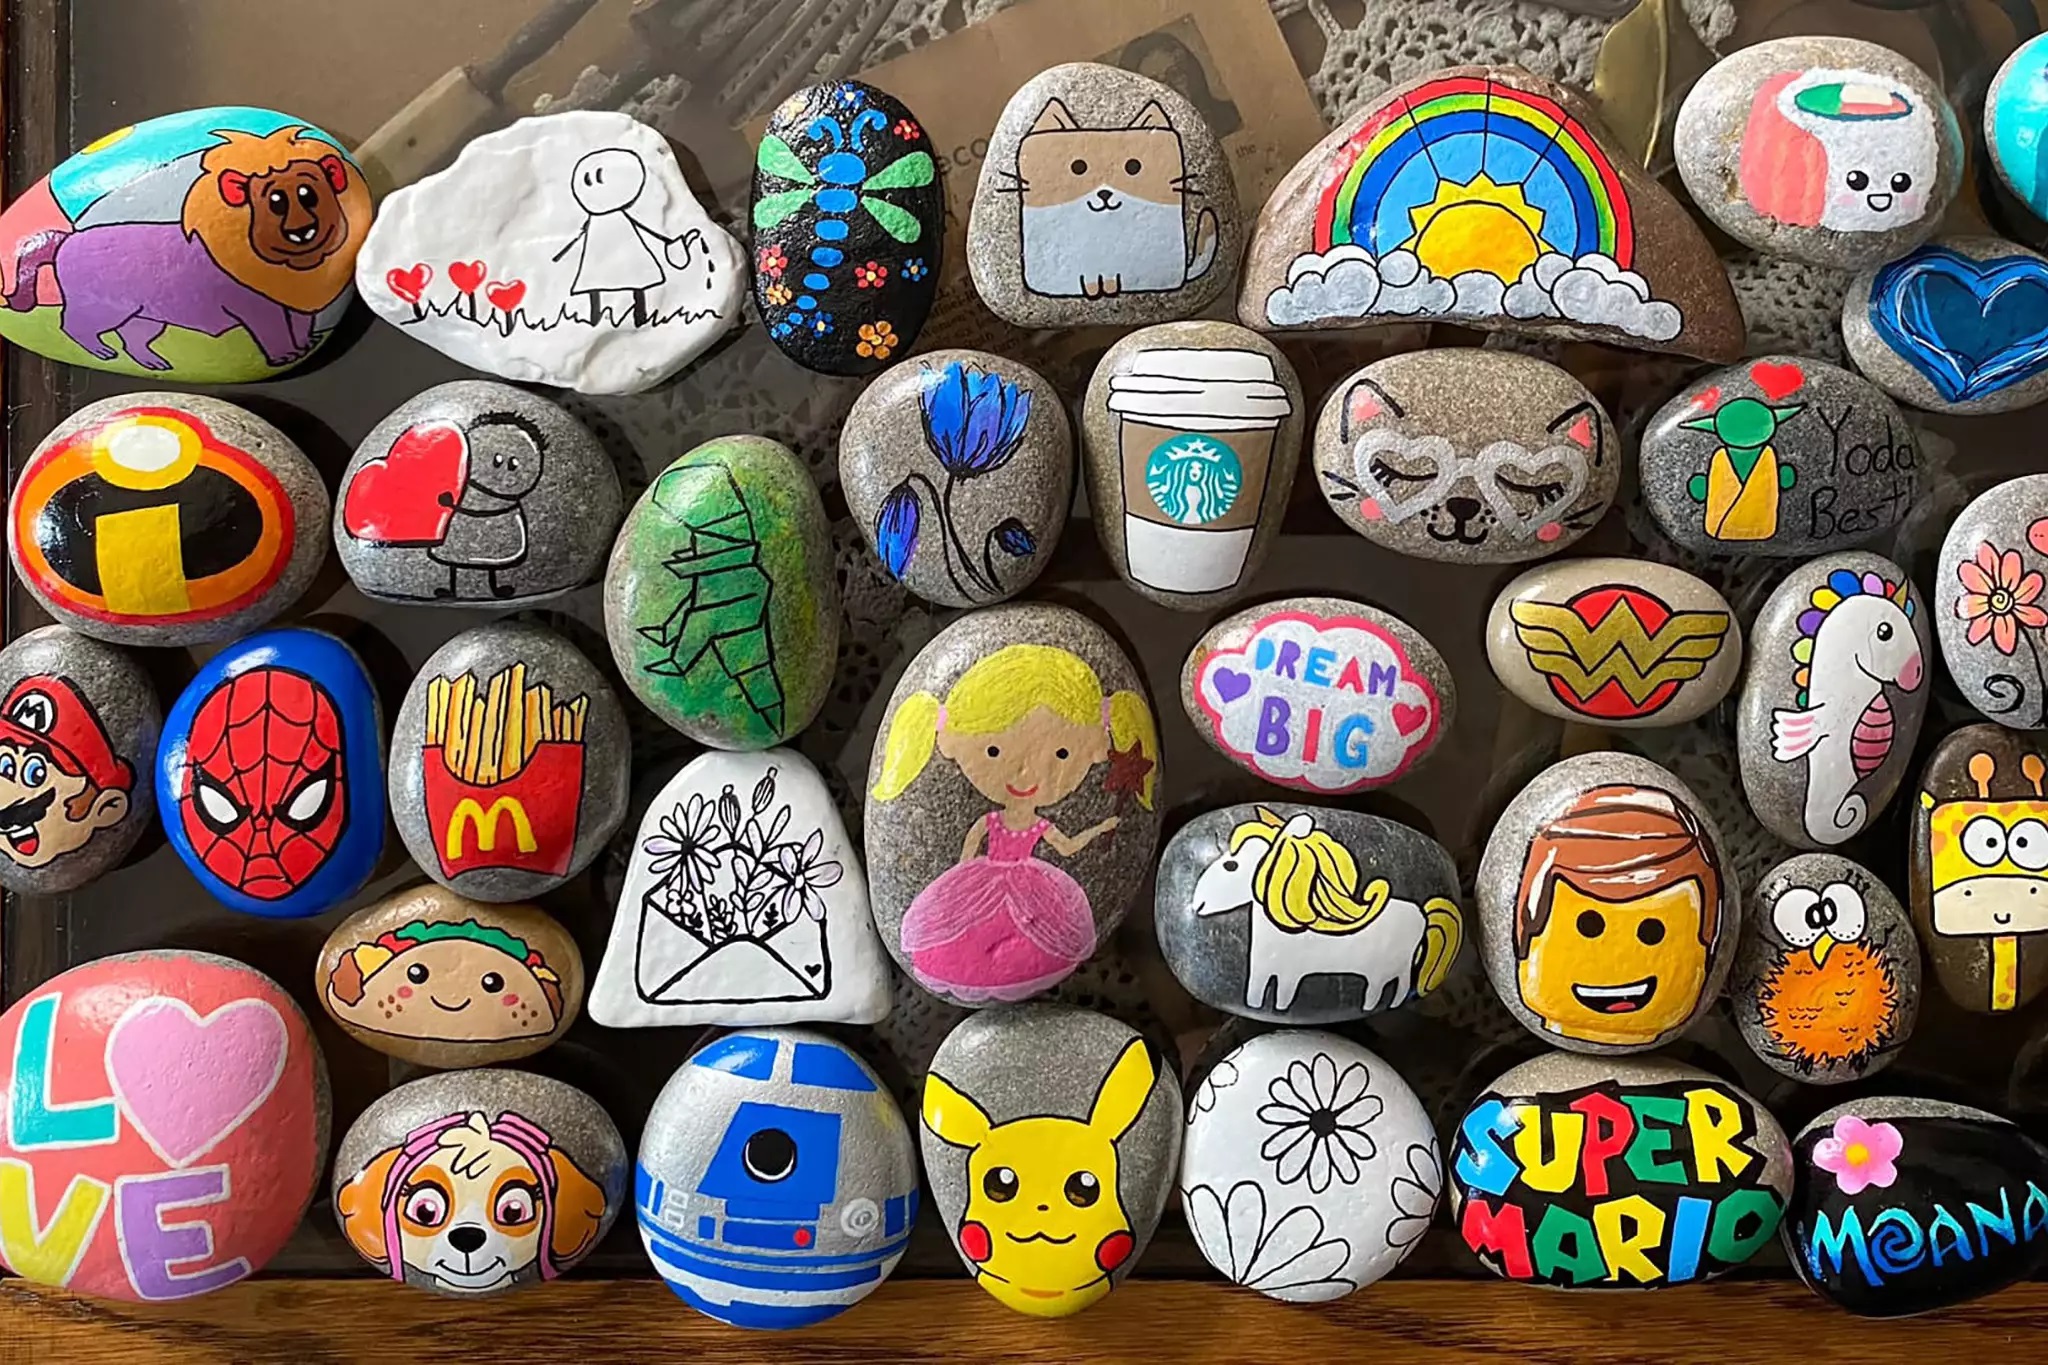 Display acrylic painted rocks